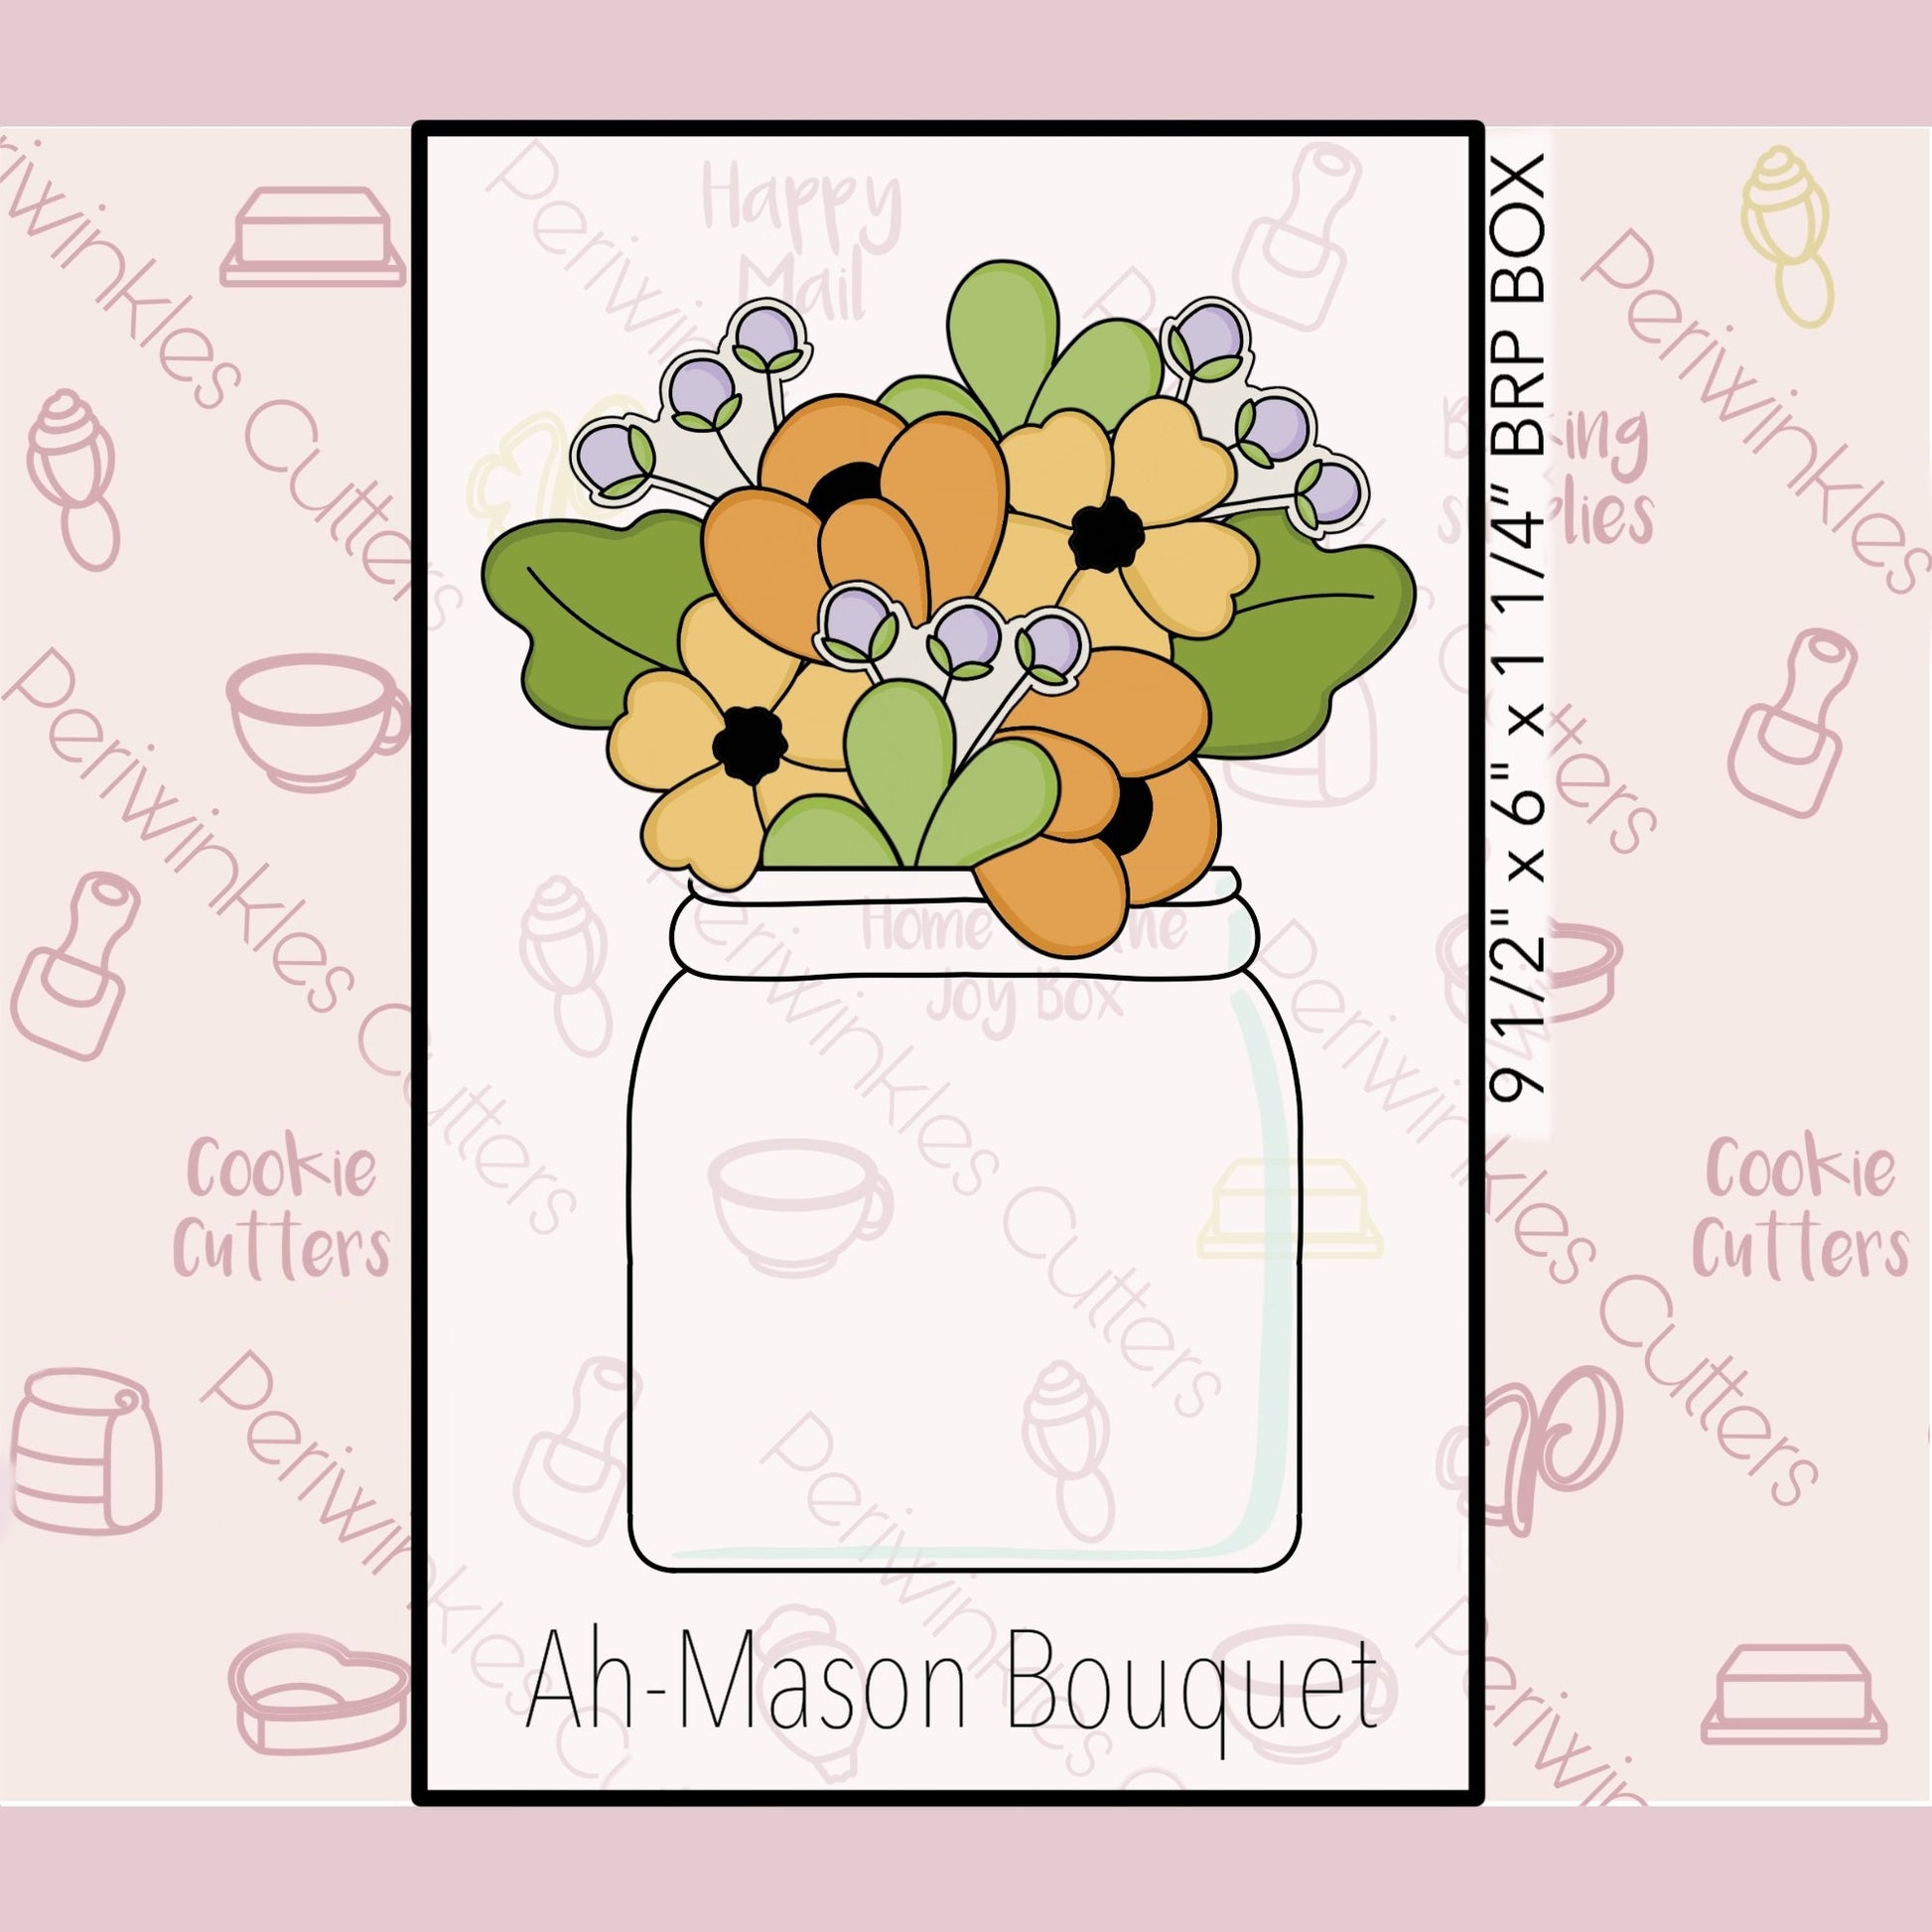 Mason Bouquet 6 pieces Cookie Cutter Set - Periwinkles Cutters